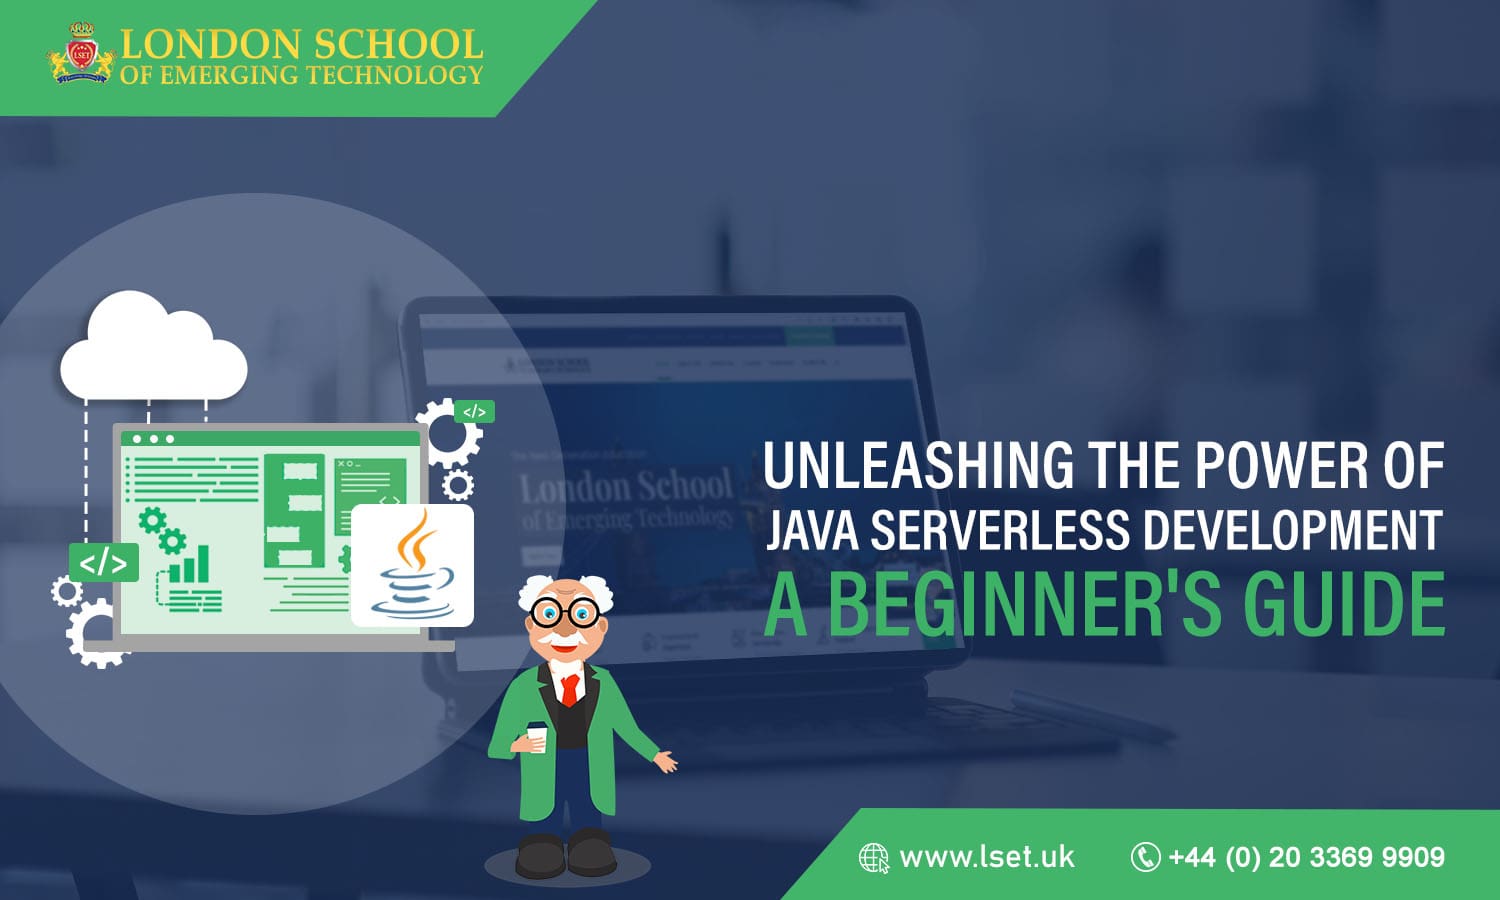 Java Serverless Development